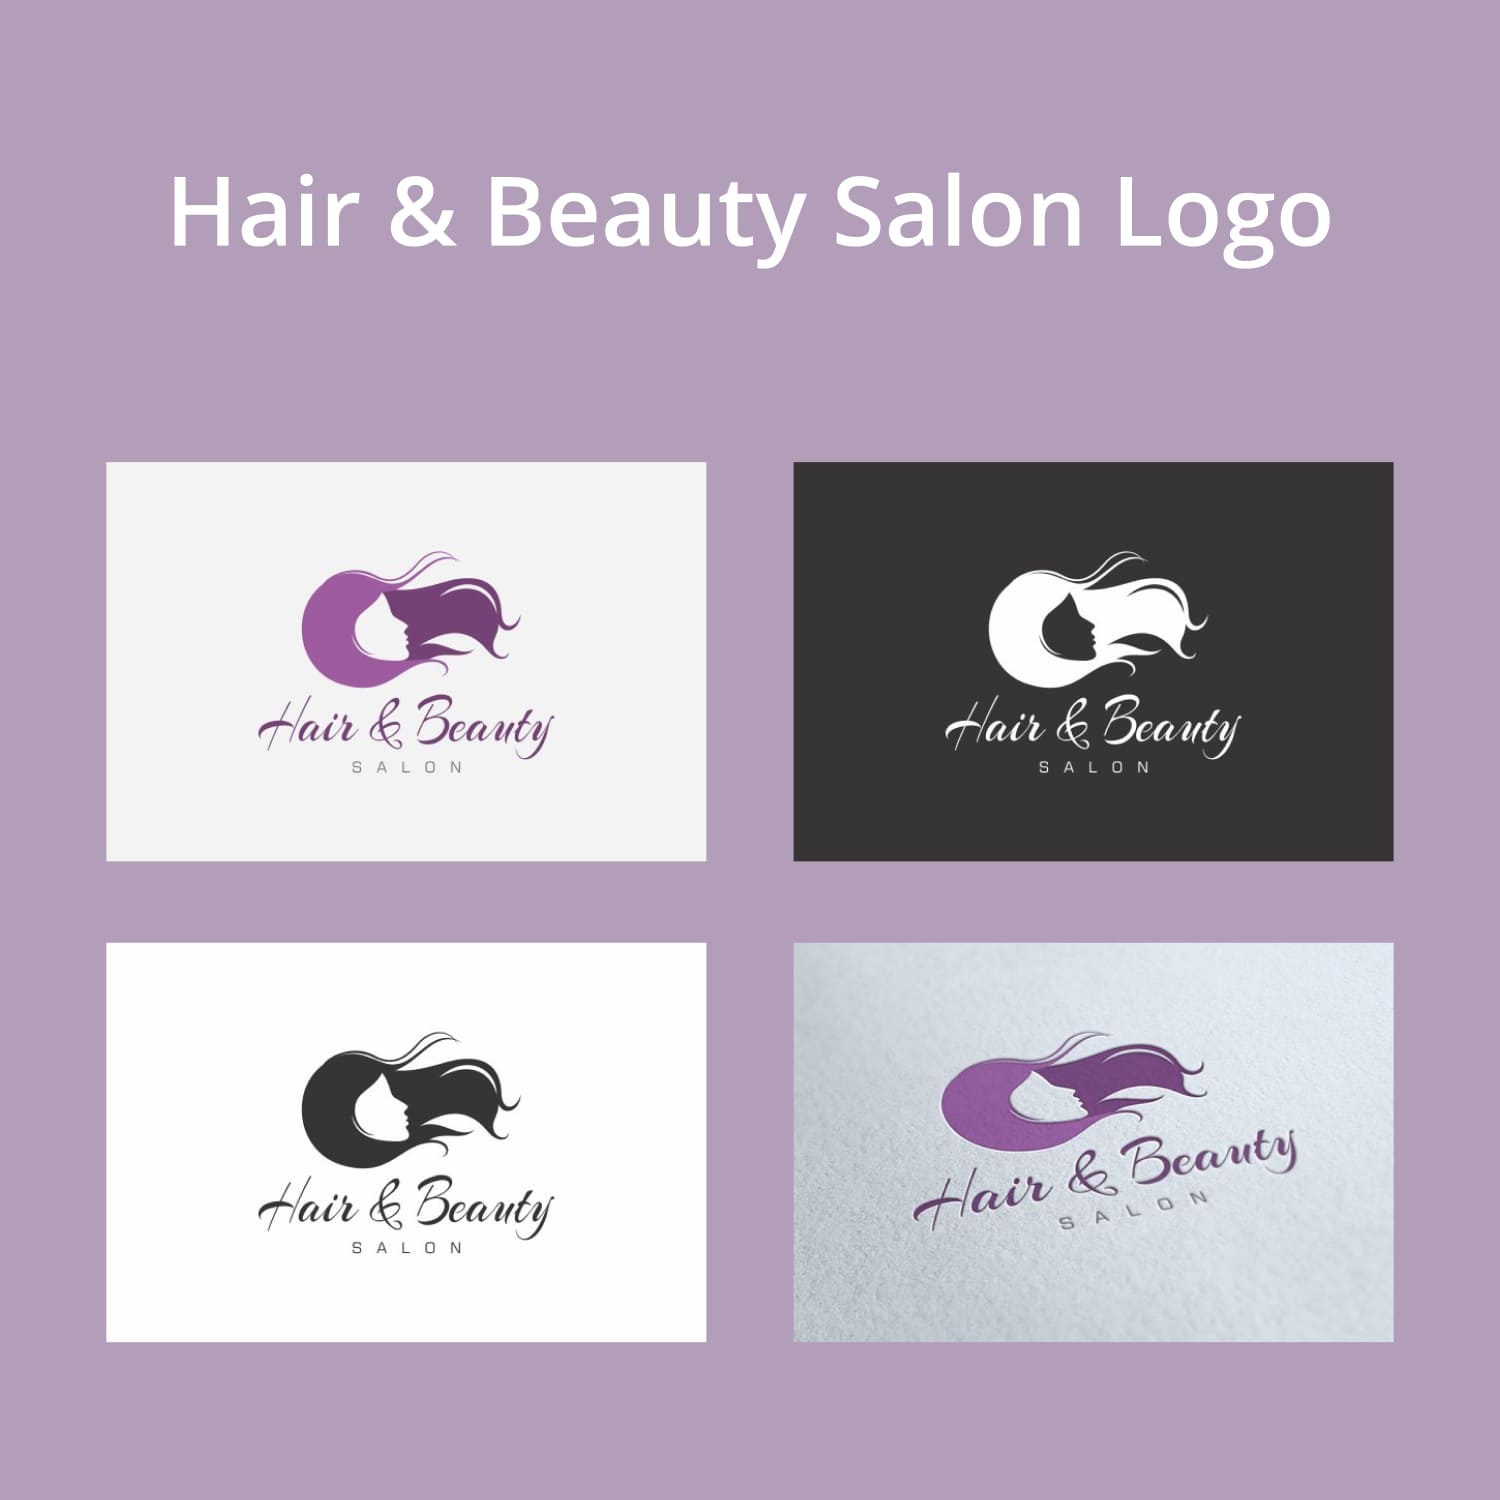 Hair & Beauty Salon Logo – MasterBundles